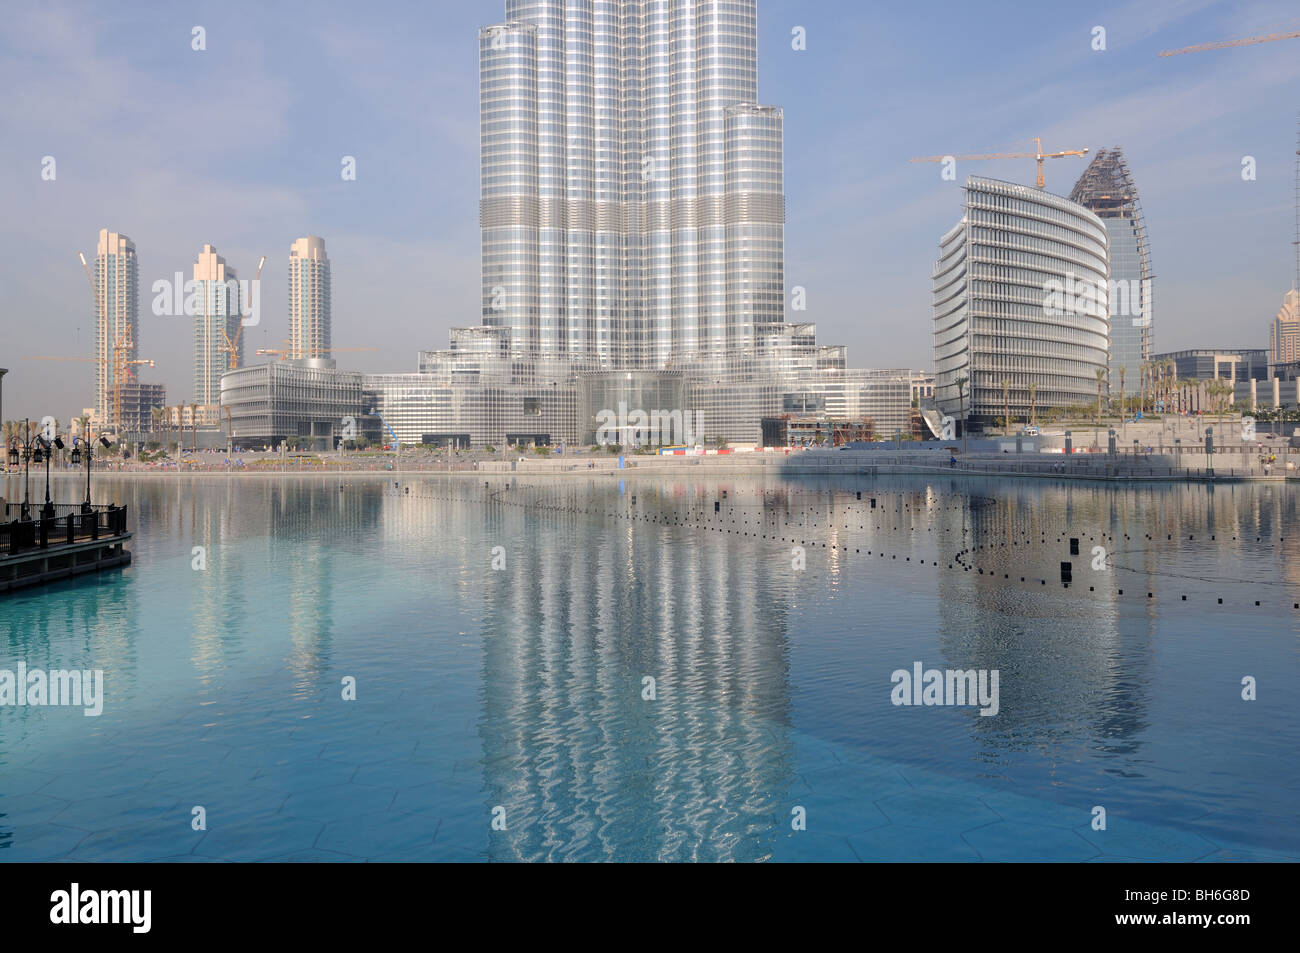 Reflection of the Burj Khalifa (Burj Dubai) in Dubai, United Arab Emirates Stock Photo